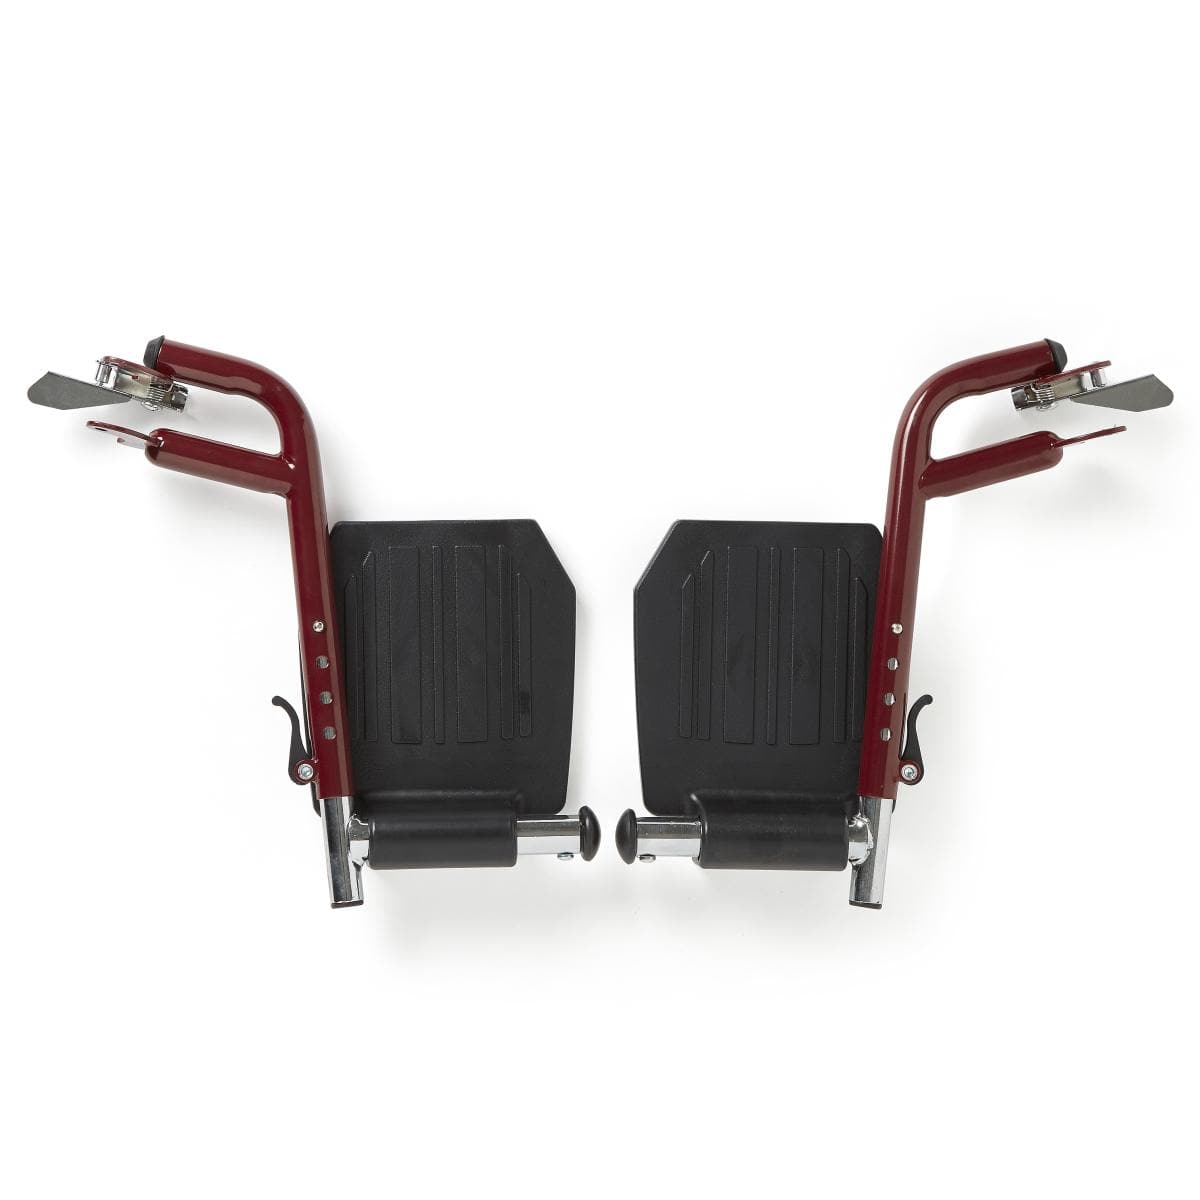 Medline Case of 1 Pair Medline Wheelchair Footrest Assemblies